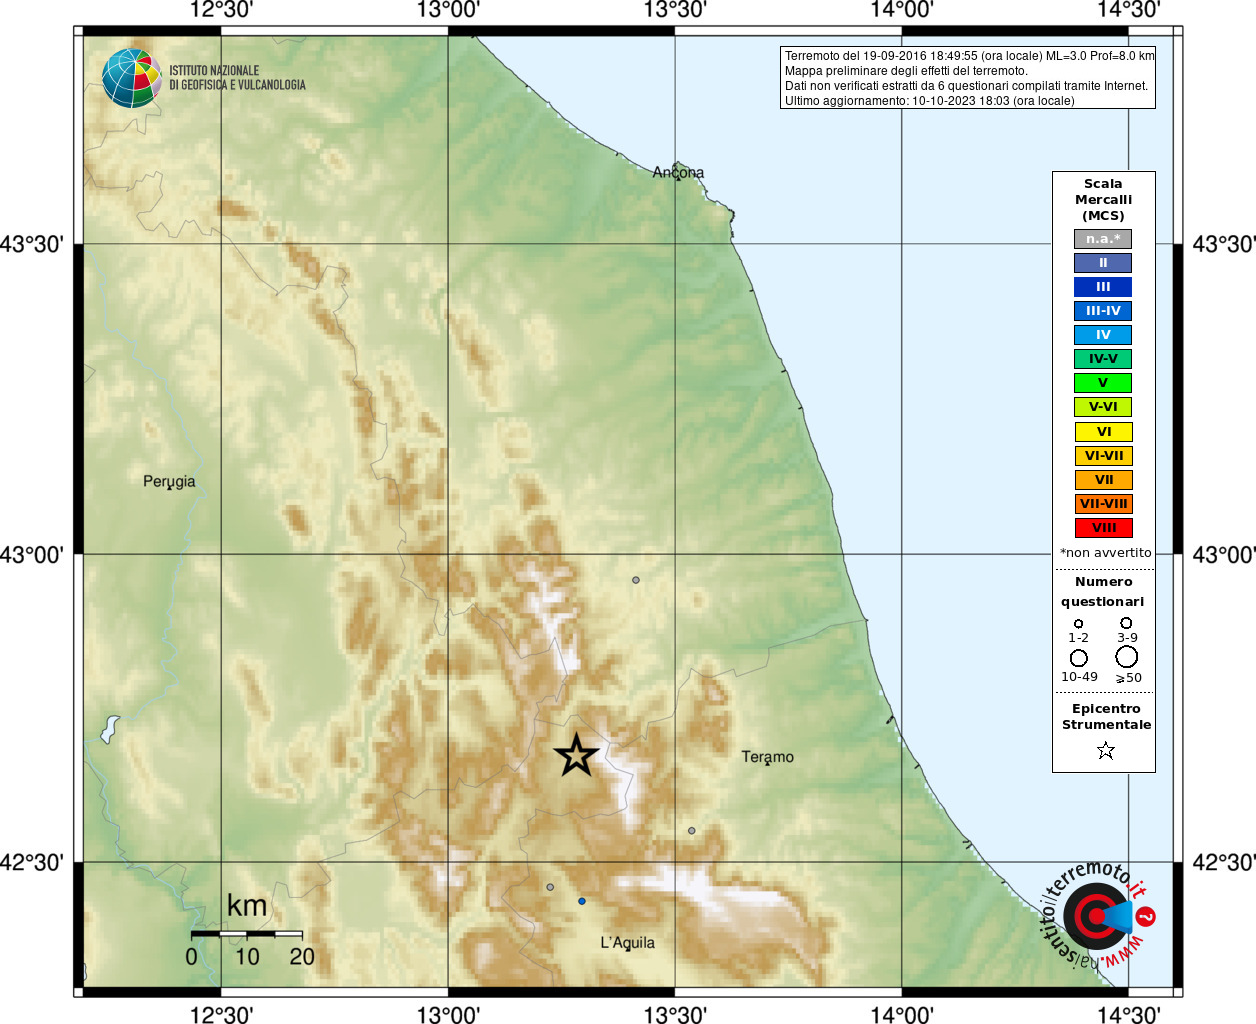 Earthquake 4 km SE Accumoli (RI), Magnitude ML 3.0, 19 September 2016 time 18:49:55 ...